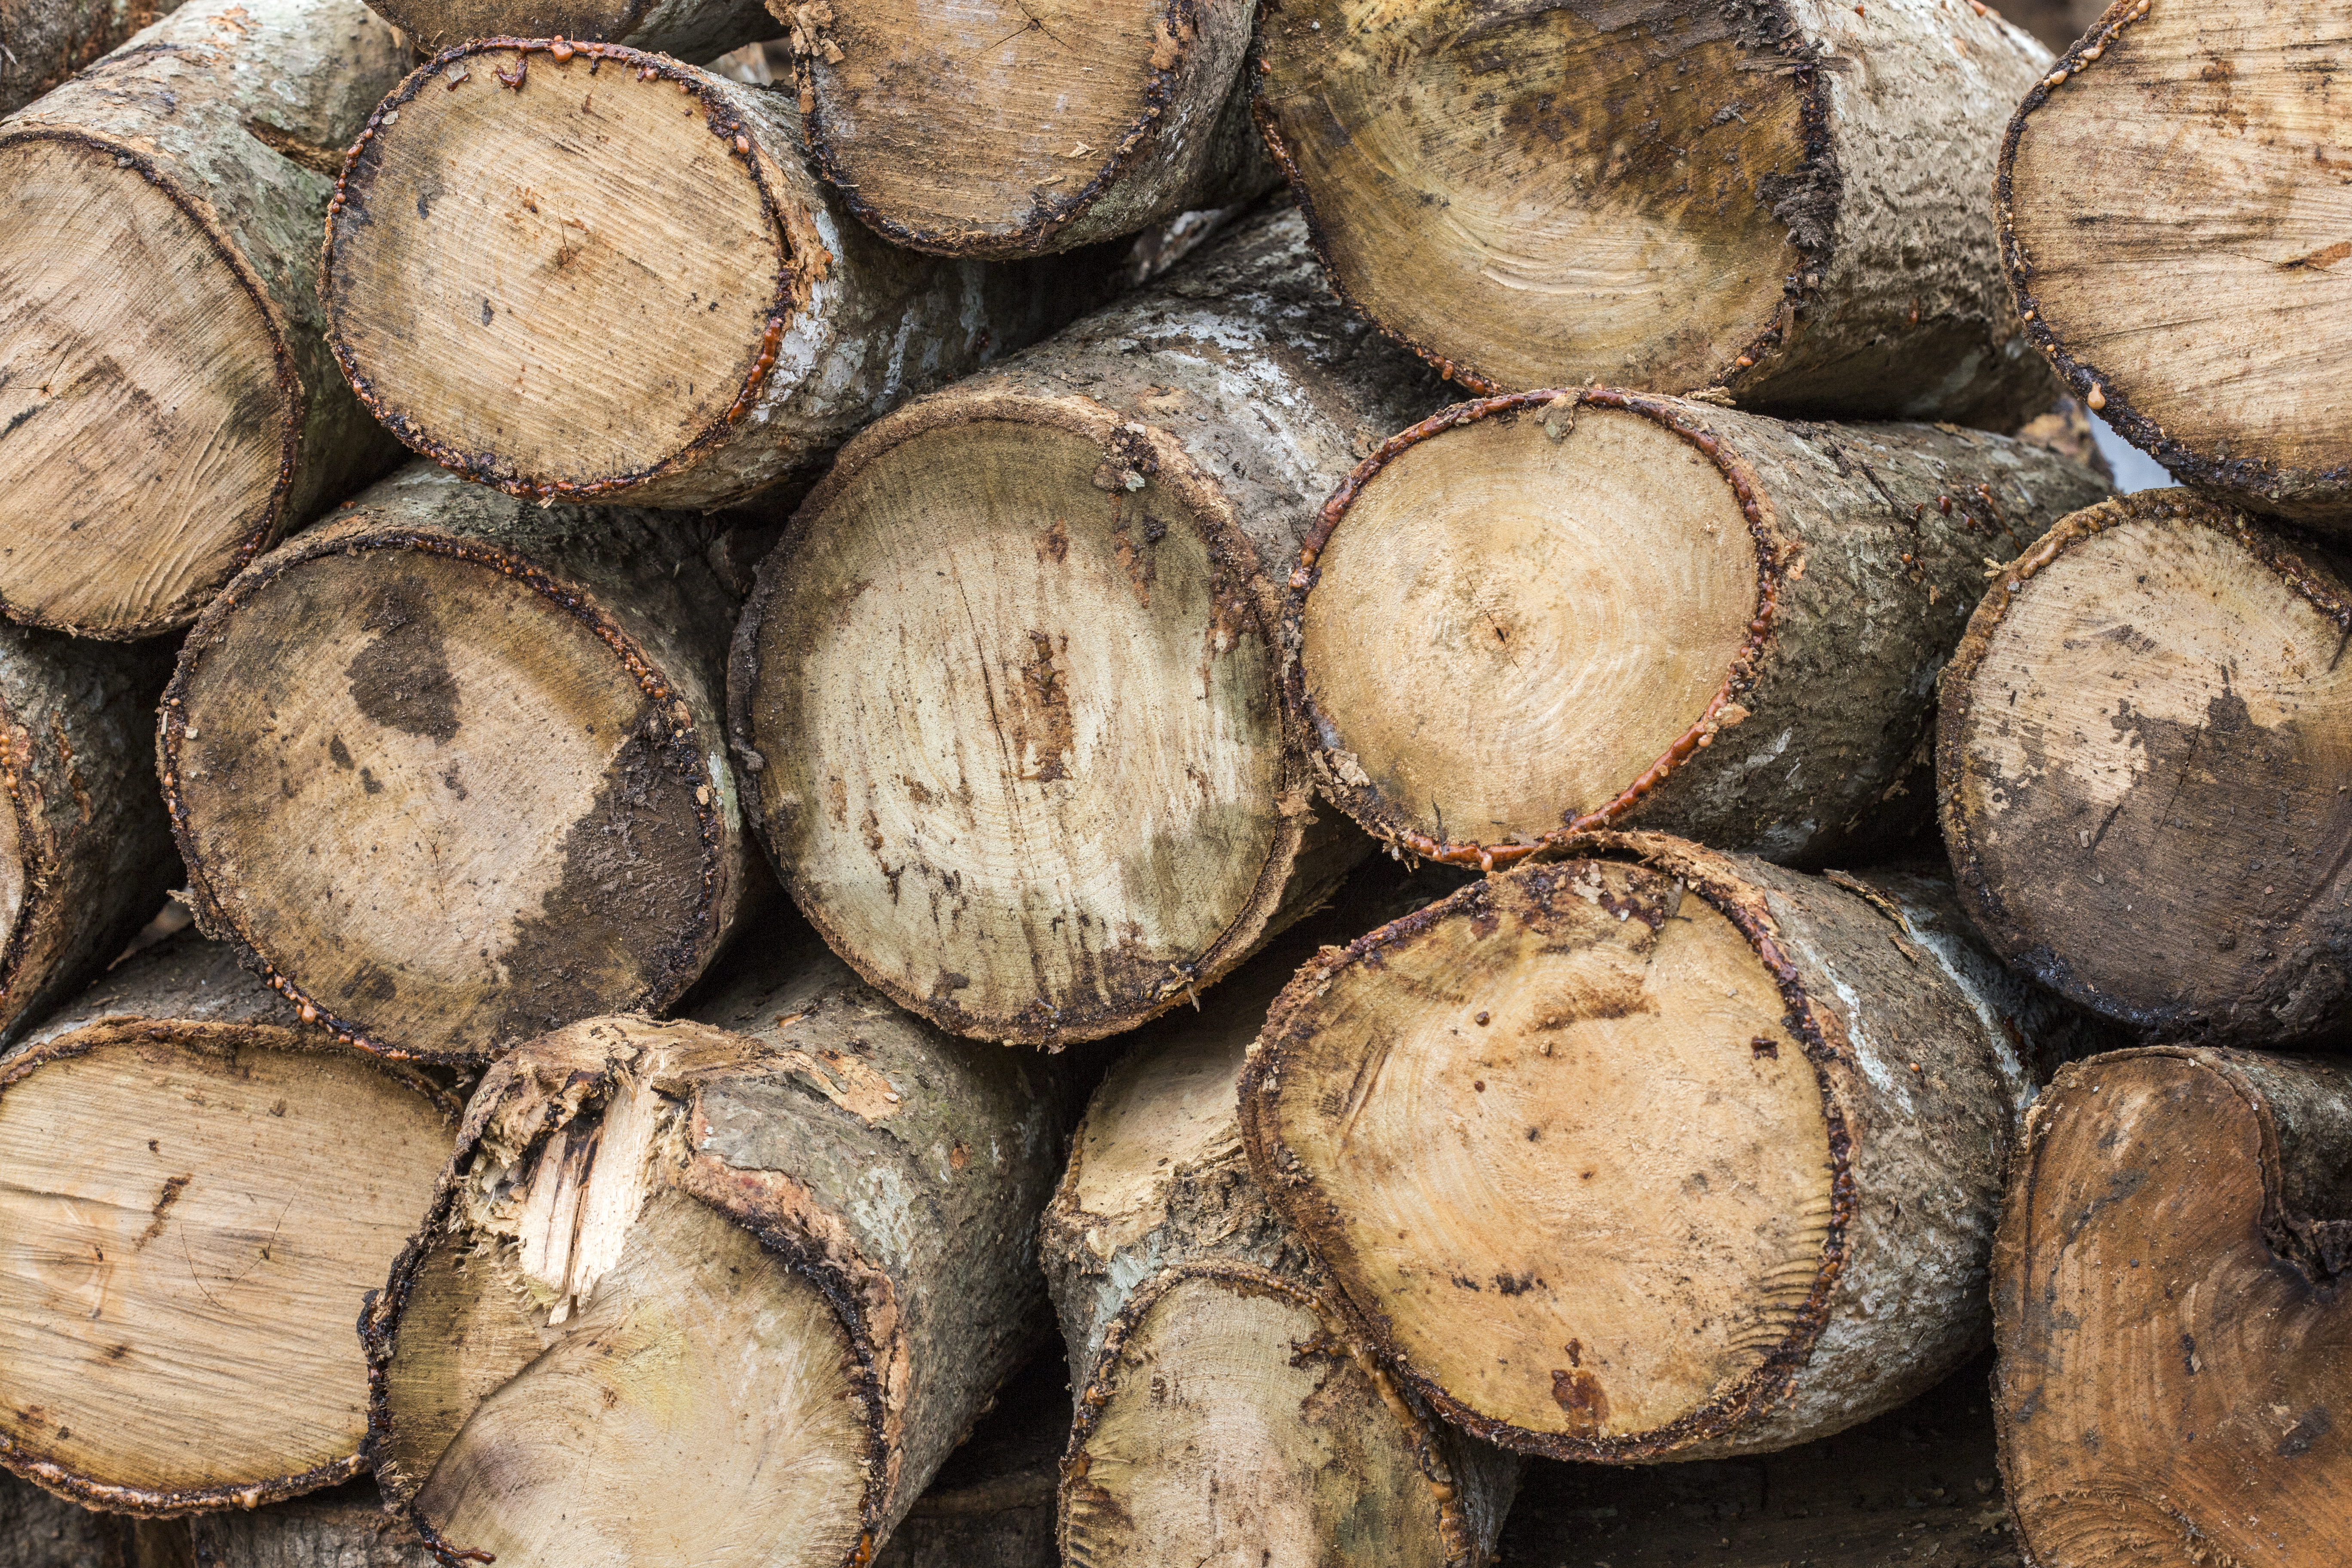 Pest Control OKC: Keeping Firewood Pests at Bay